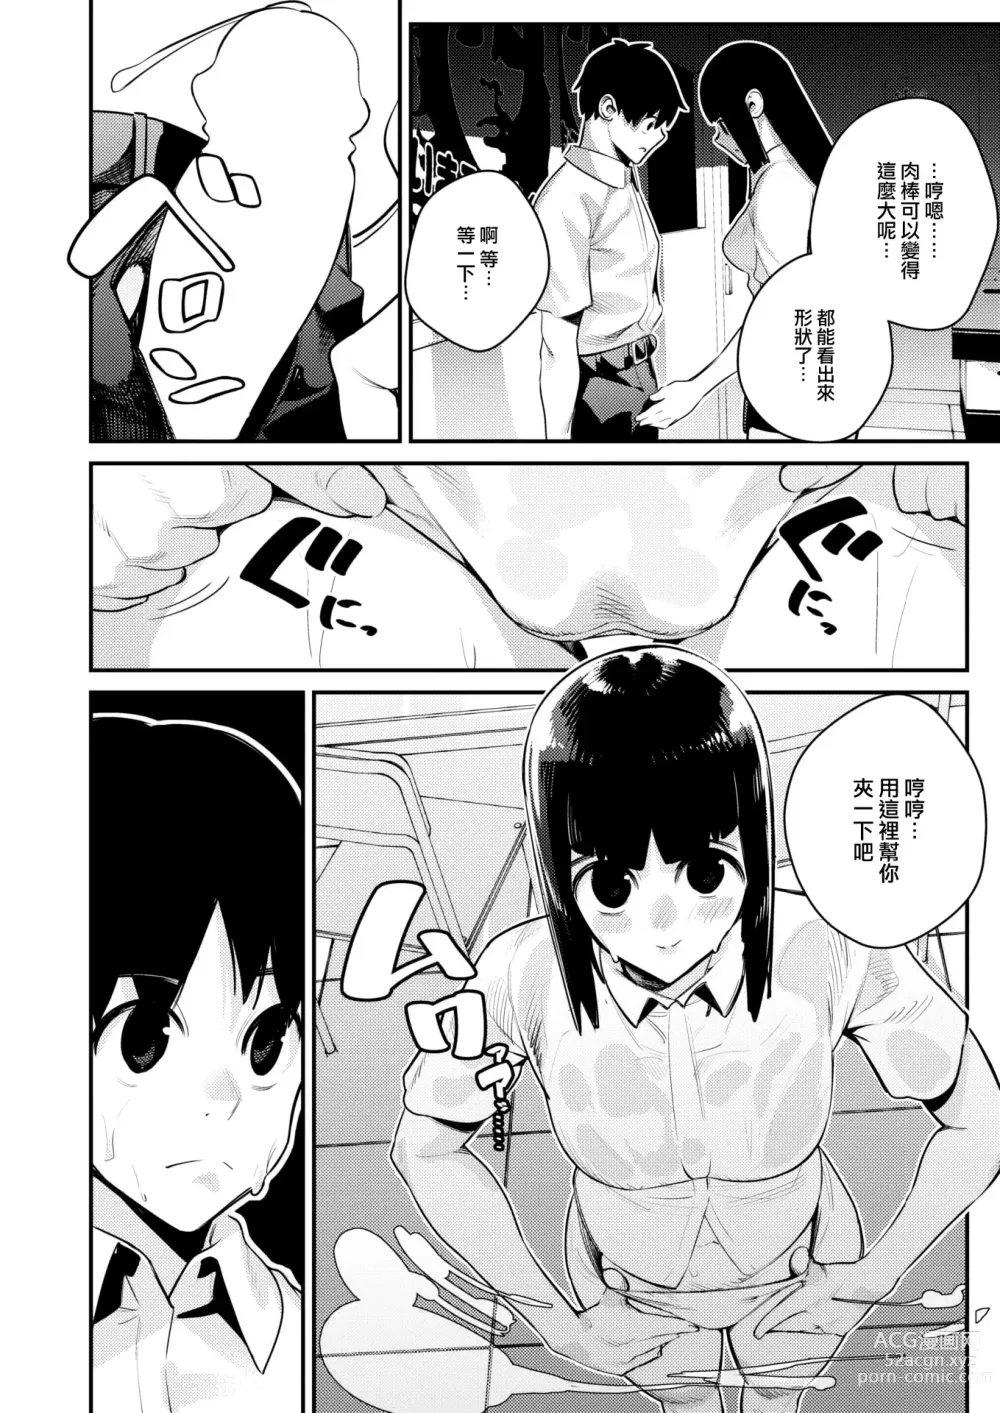 Page 13 of manga Kaijin Netsuai Mokushiroku